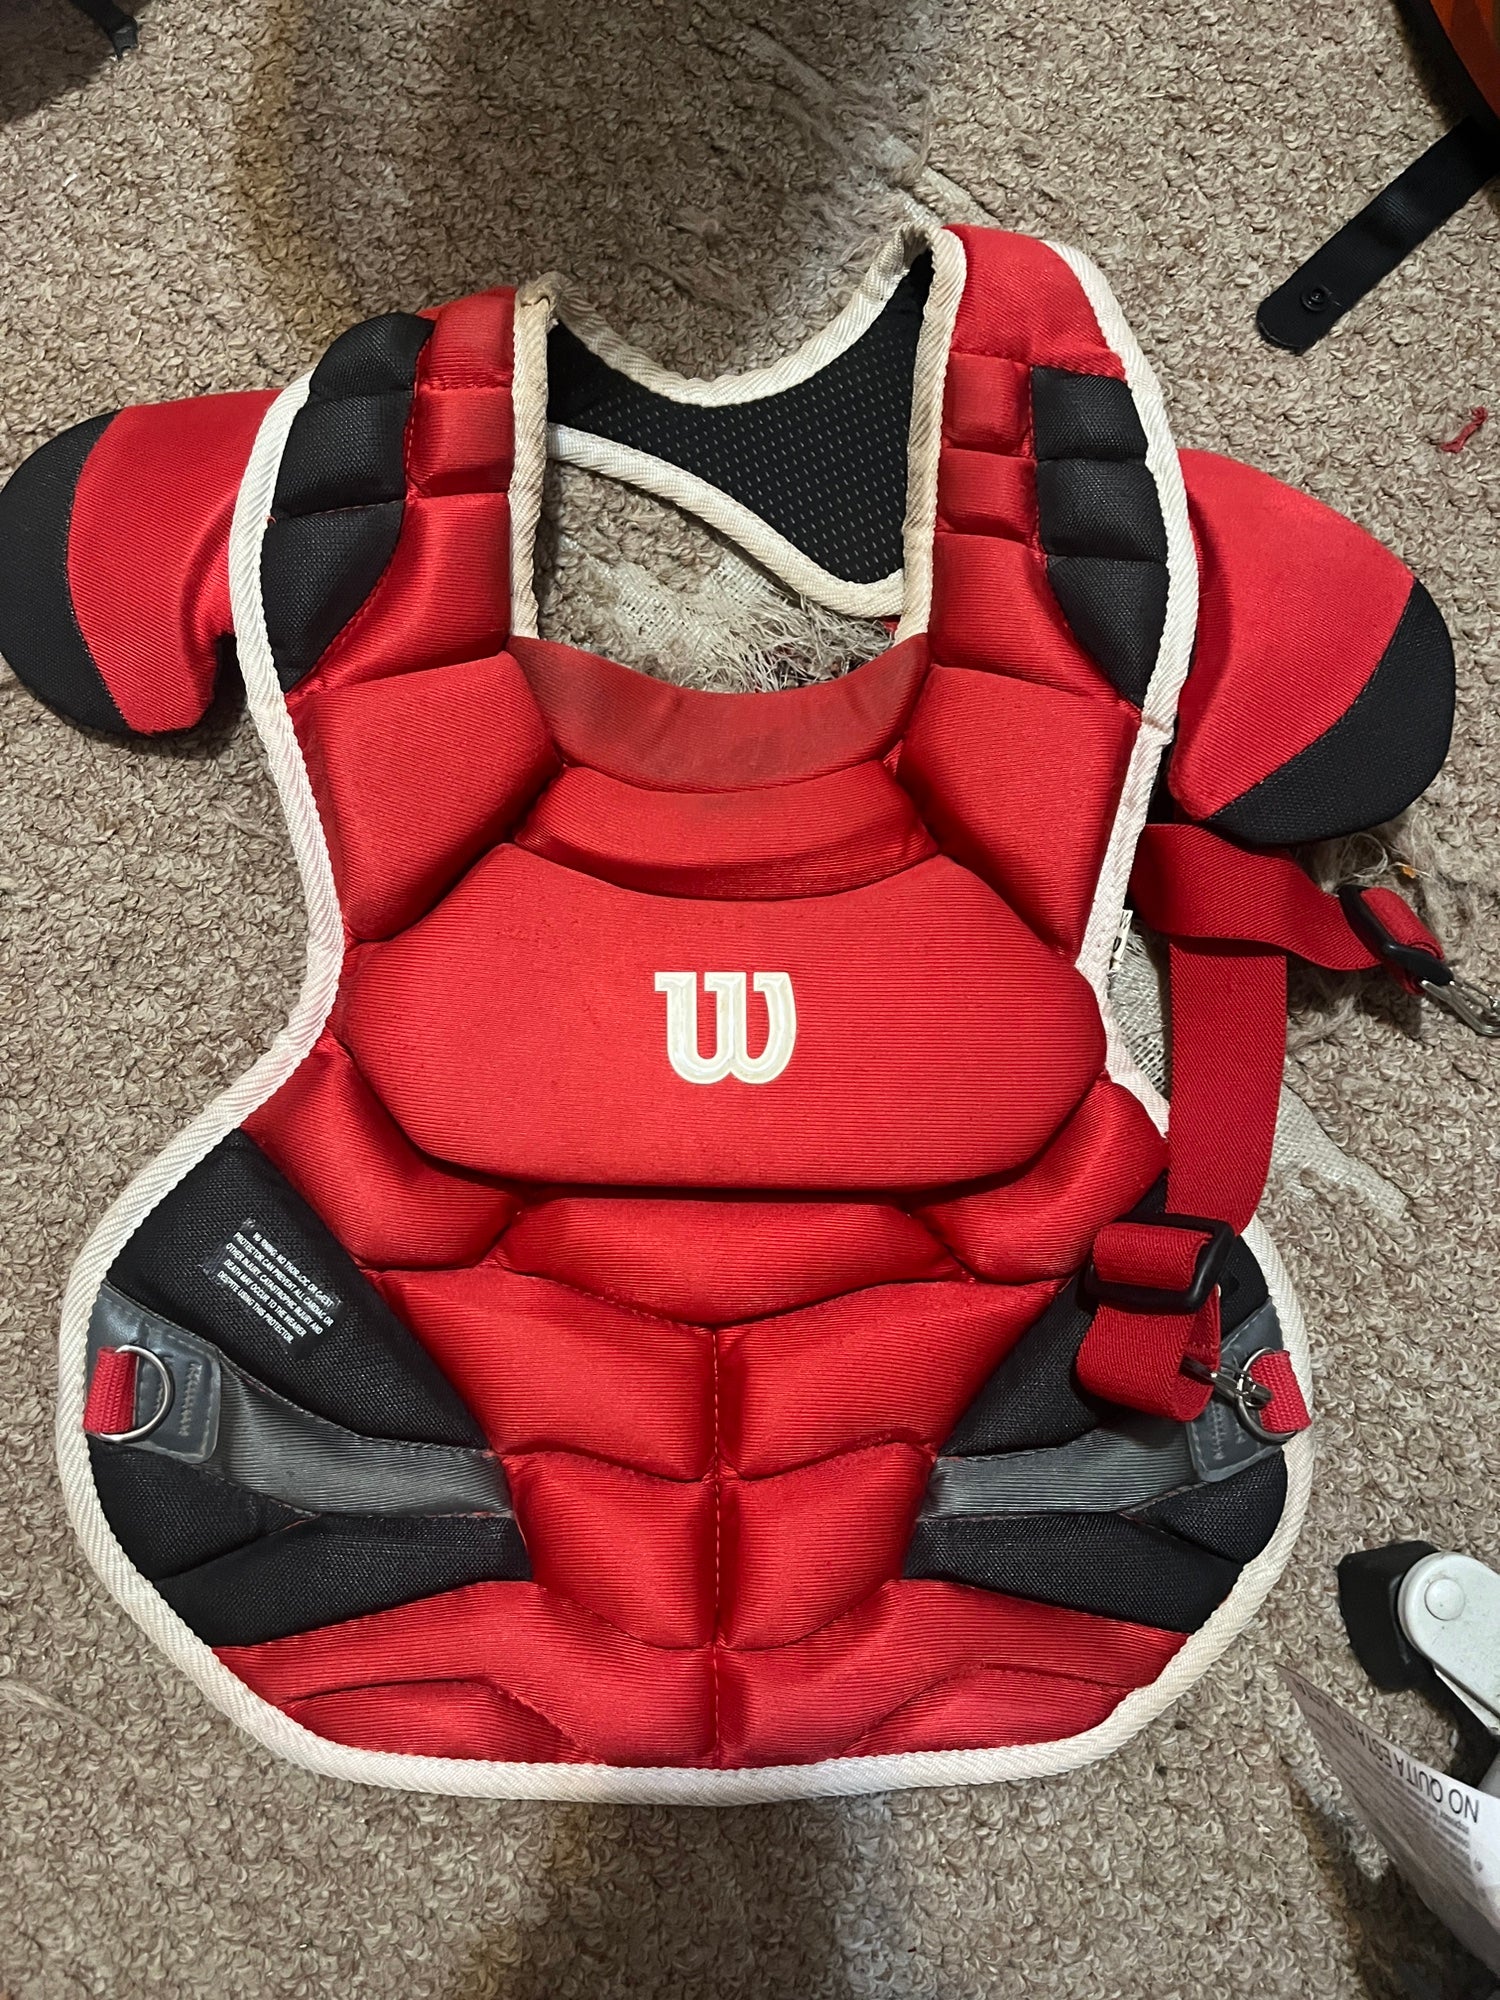 Wilson ck1 nocsae catchers gear | SidelineSwap